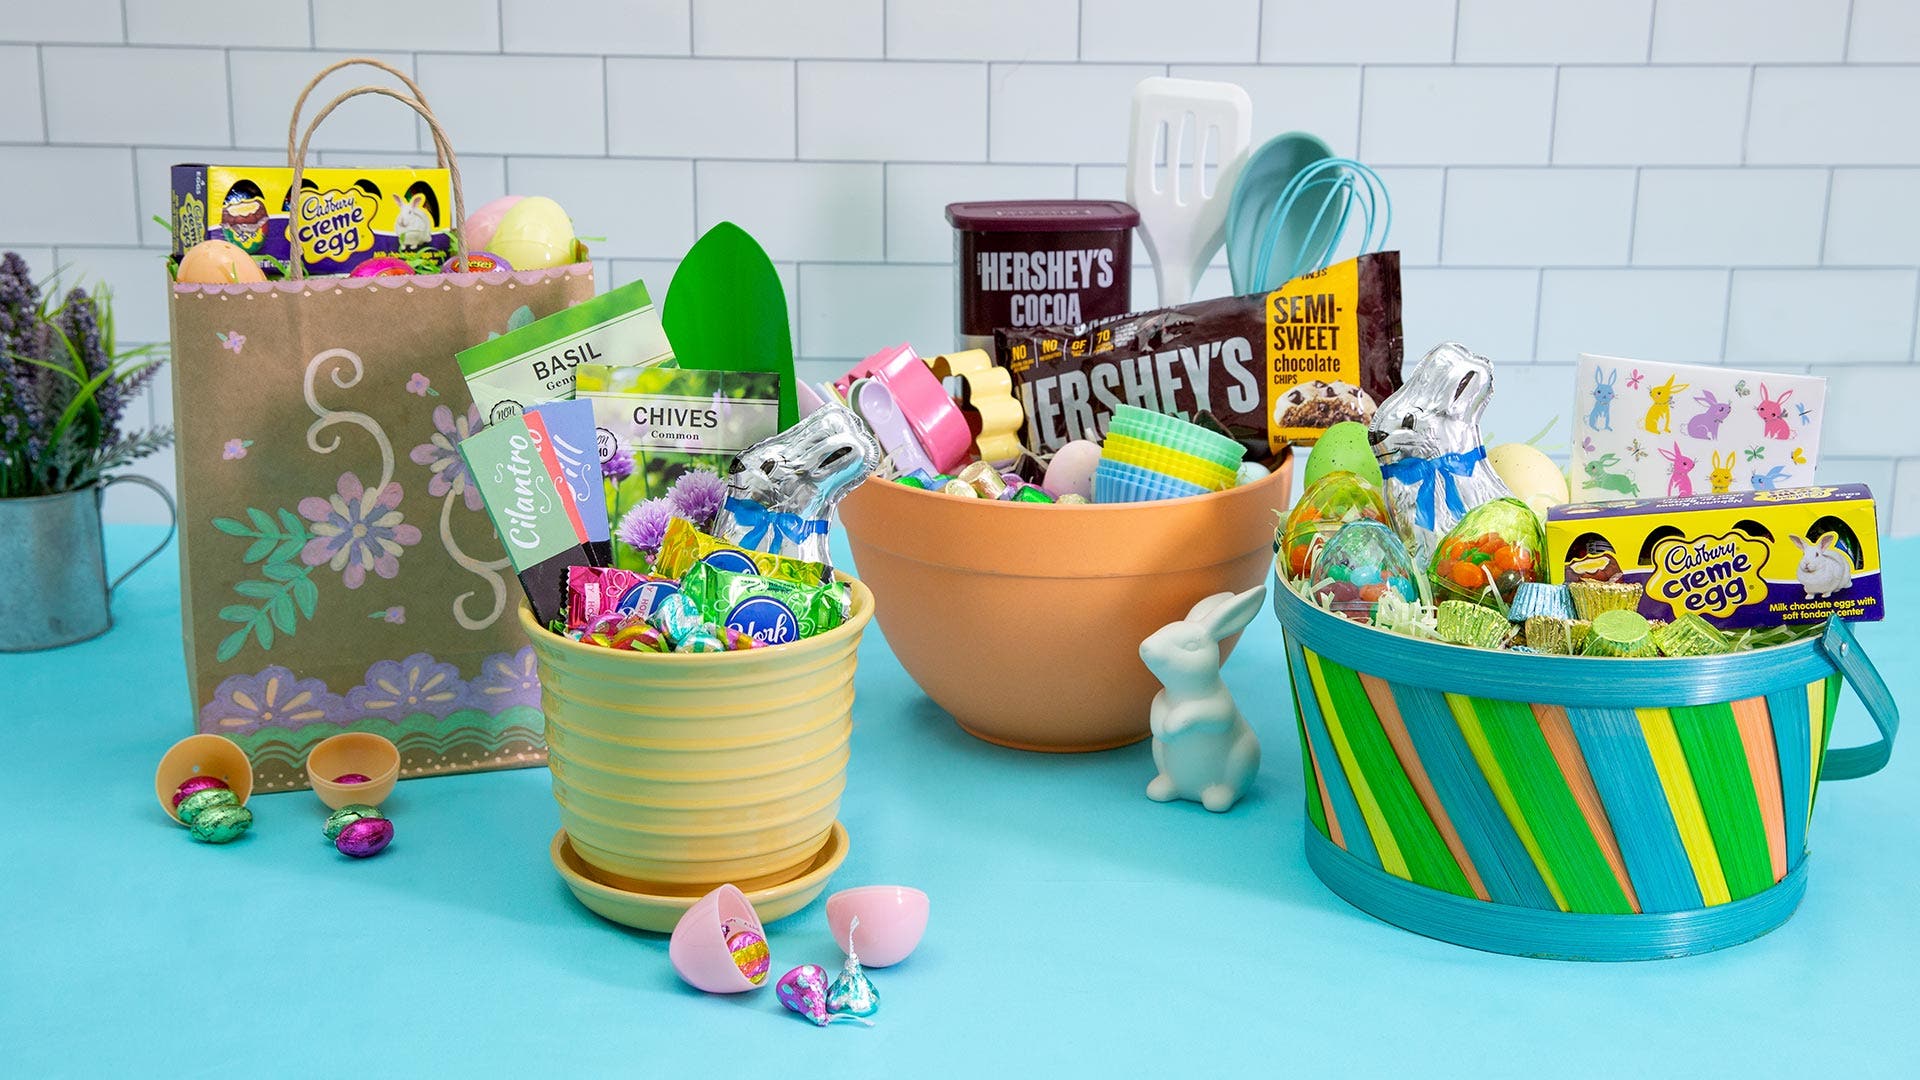 DIY Easter Basket Ideas Everyone Will Love